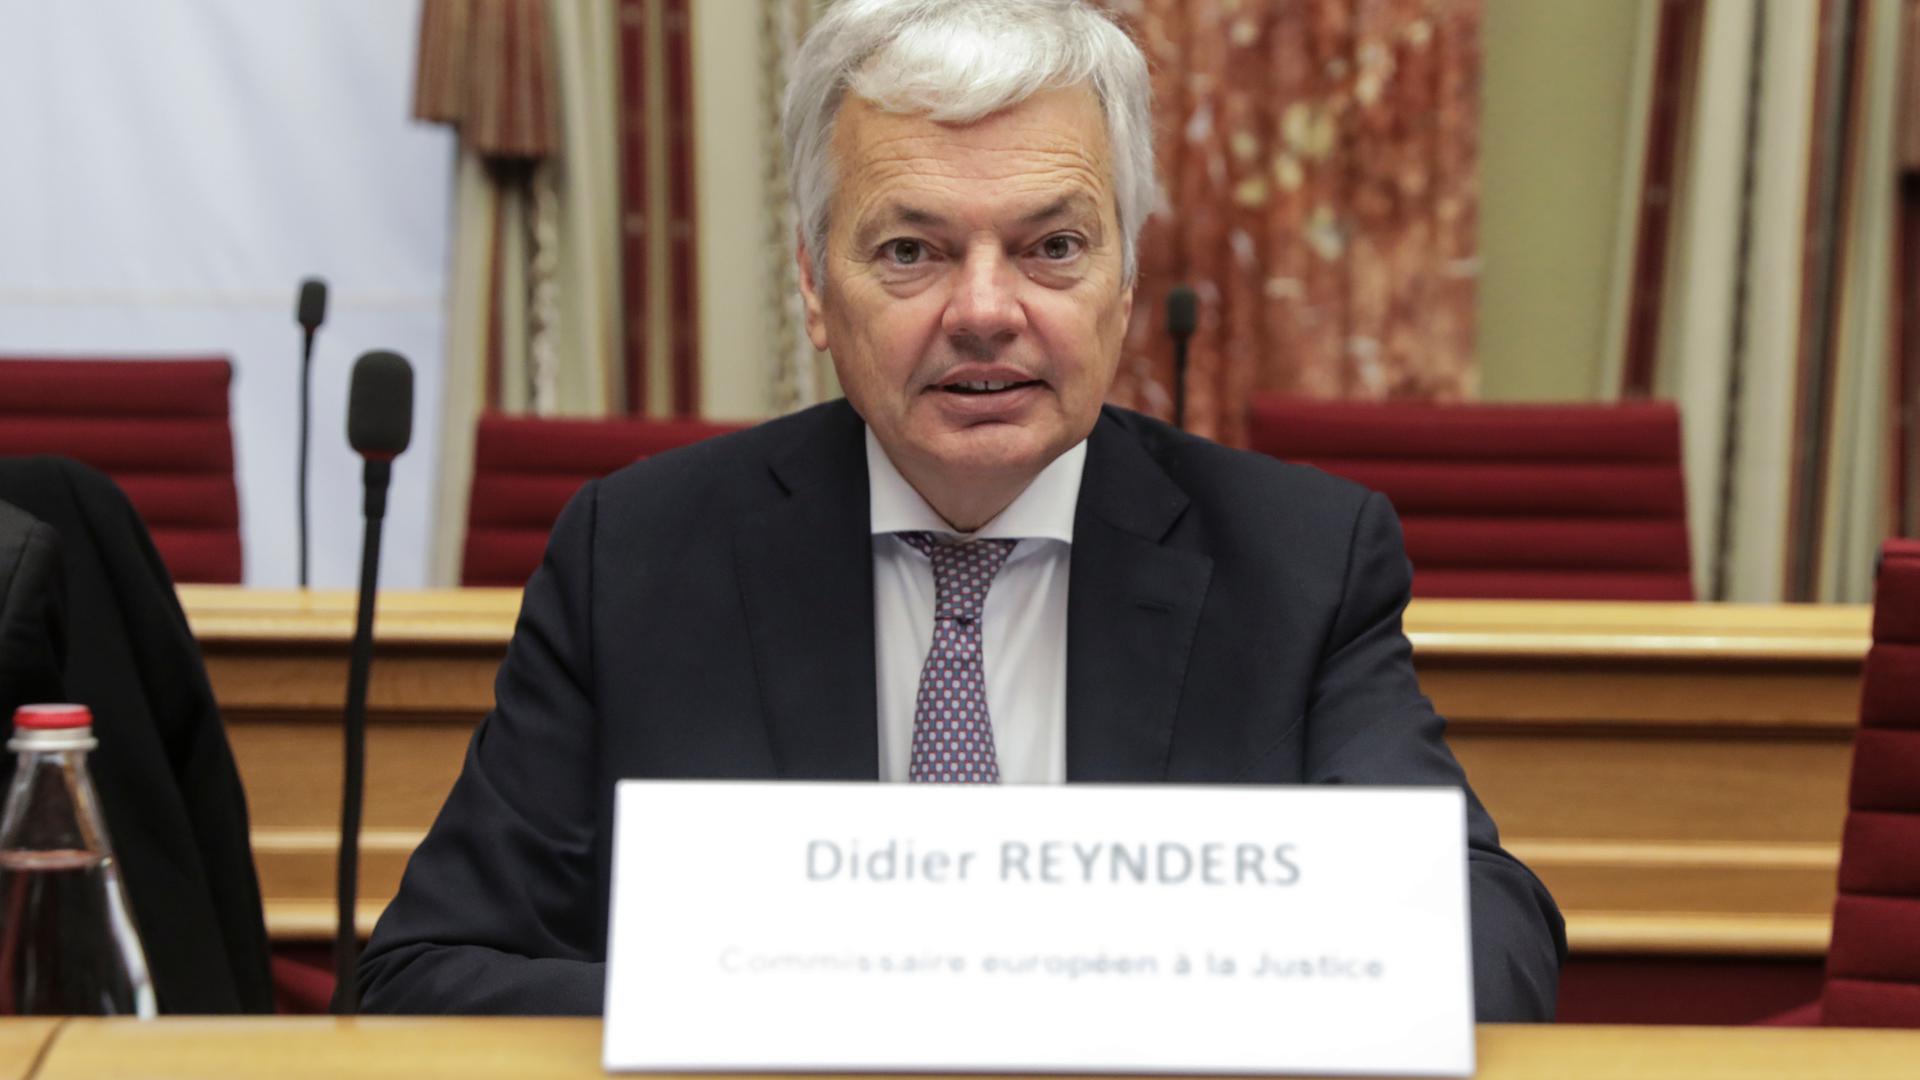 Justice Commissioner Didier Reynders